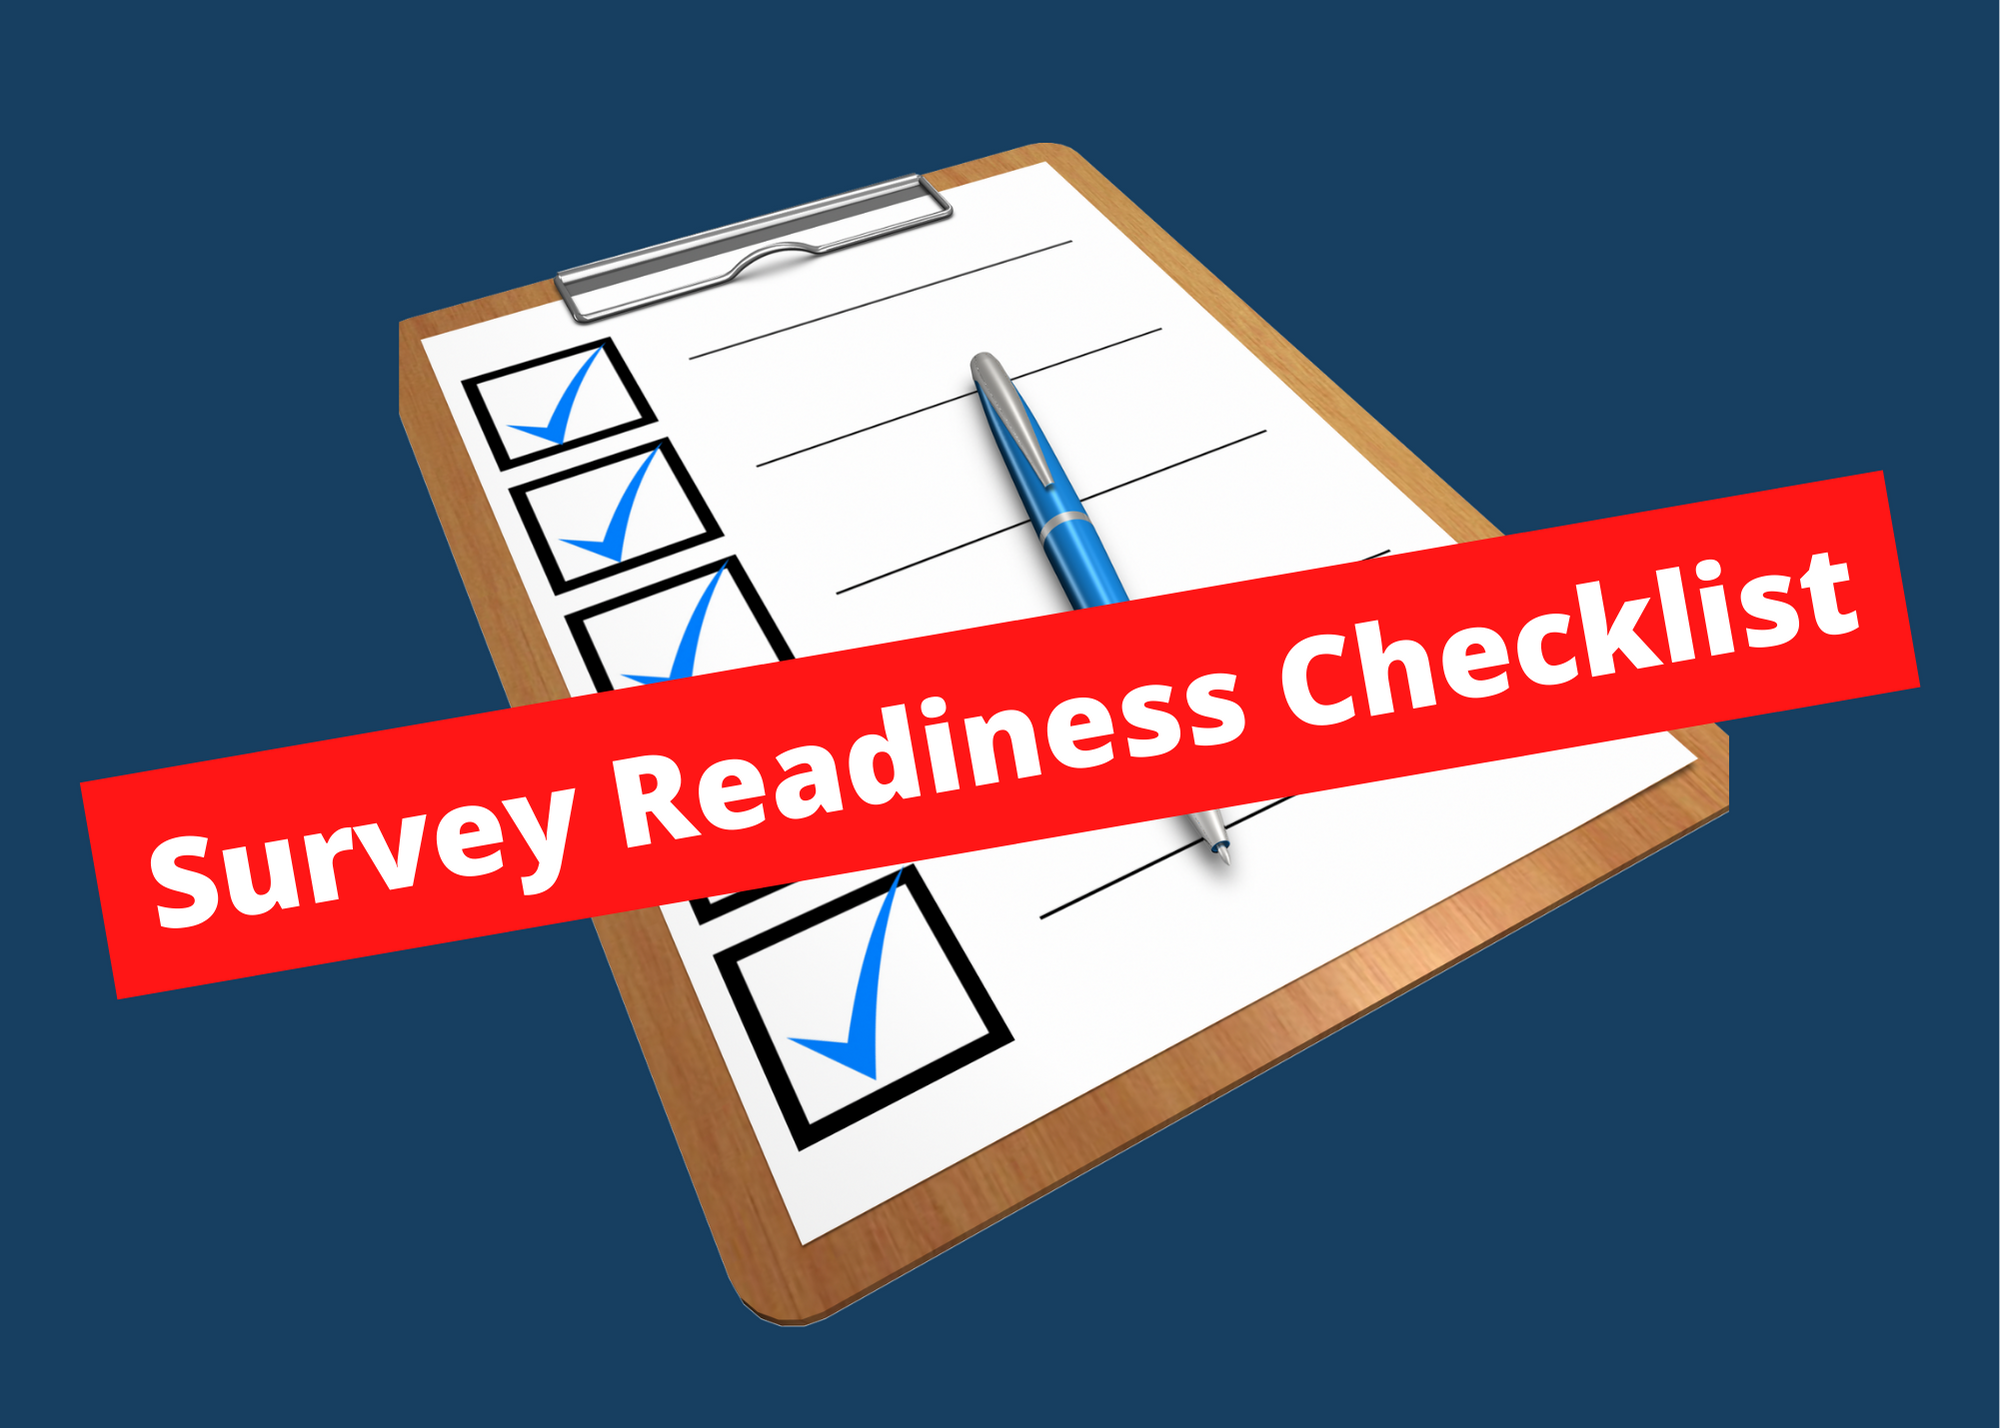 Survey Readiness Checklist